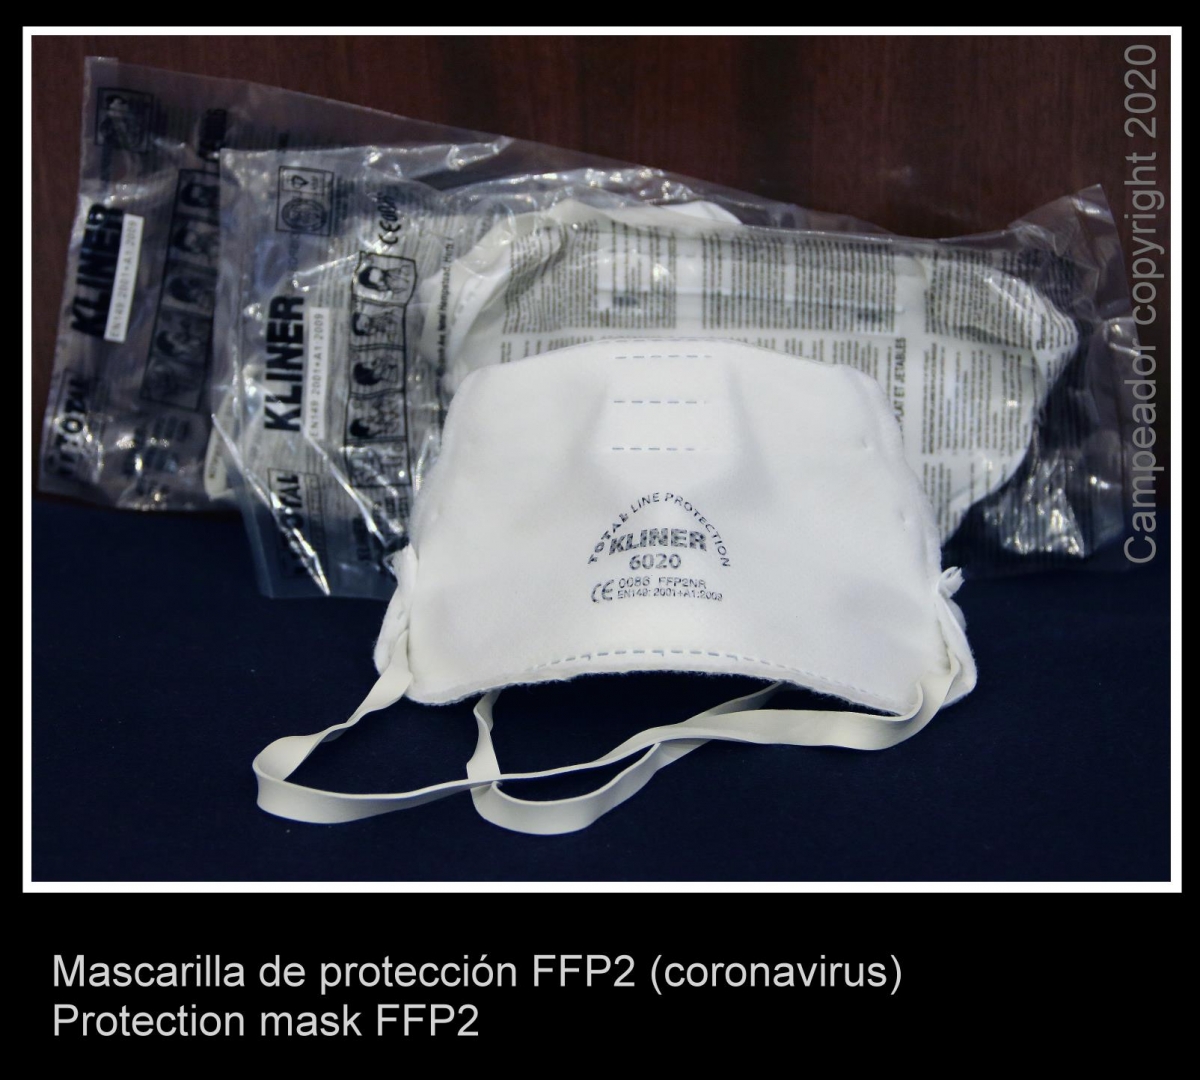 Protection Mask - Mascarilla de Proteccin (coronavirus). Photo by Mario Cid (Campeador)